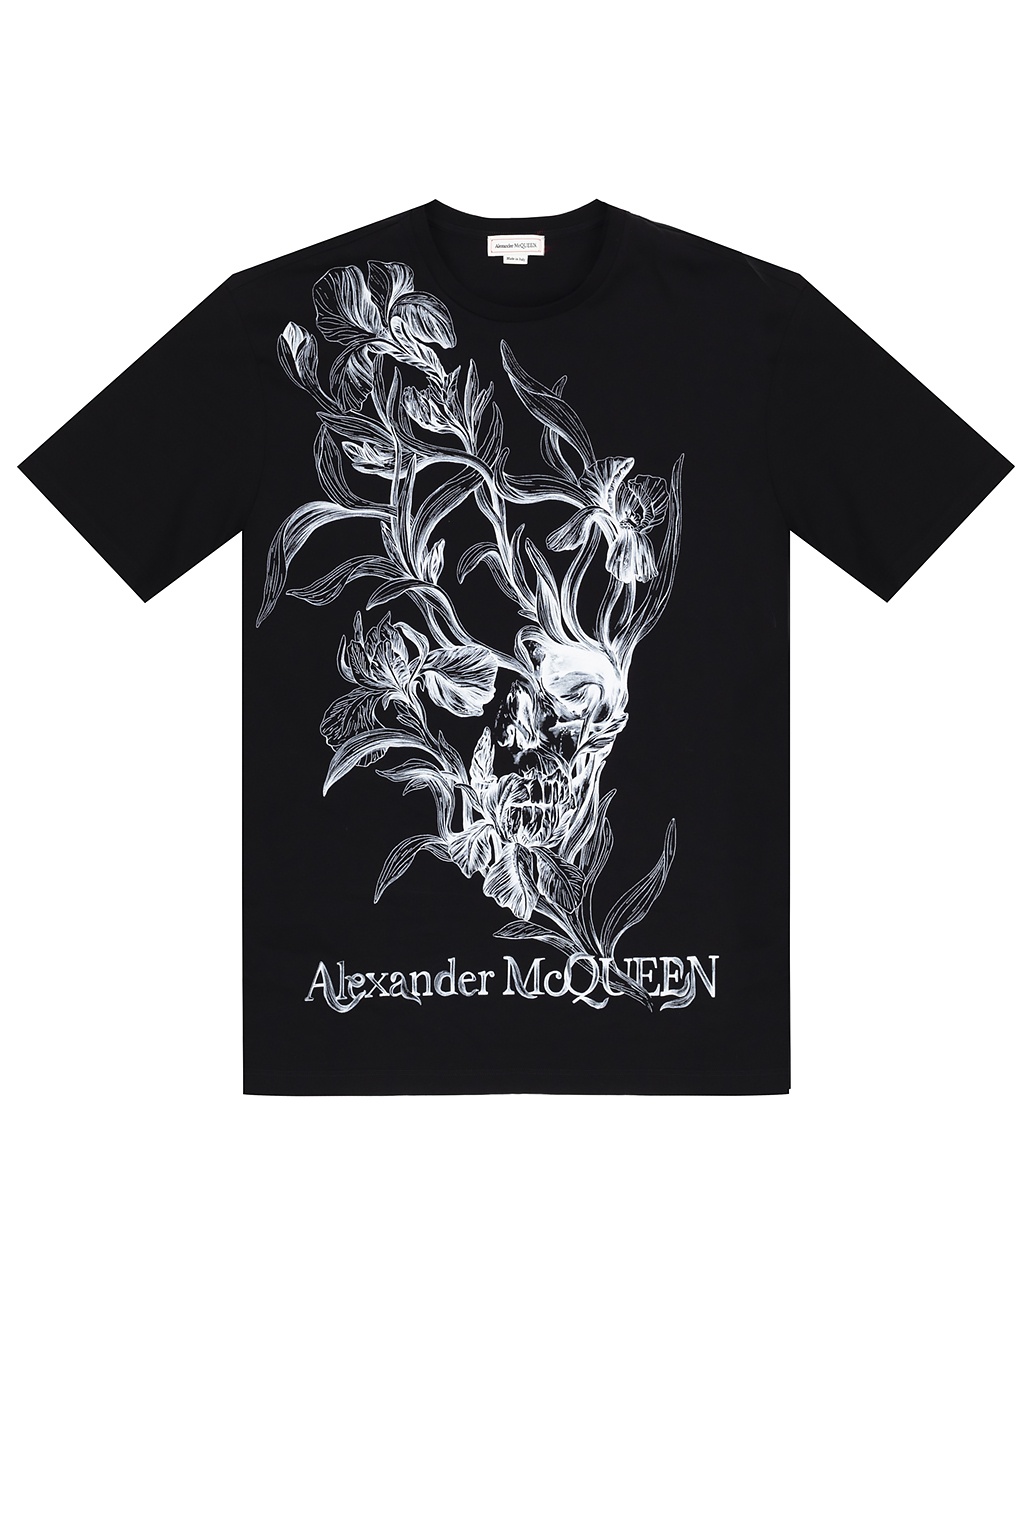 T-shirt with logo Alexander McQueen - Vitkac Singapore